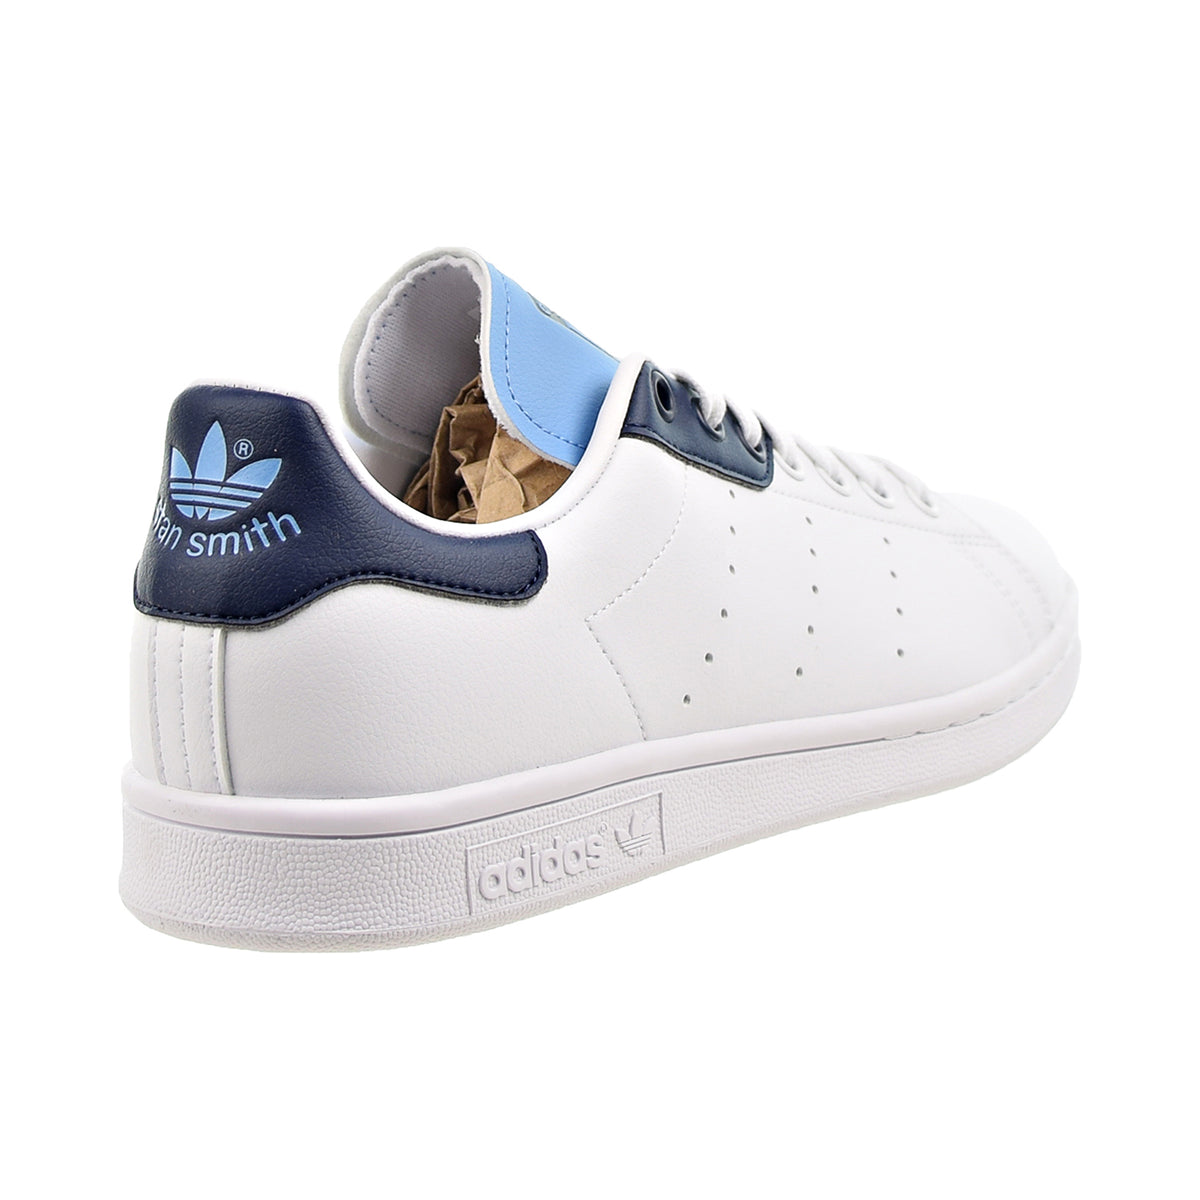 Adidas Stan Smith Men's Shoes Cloud White-Collegiate Navy-Light Blue